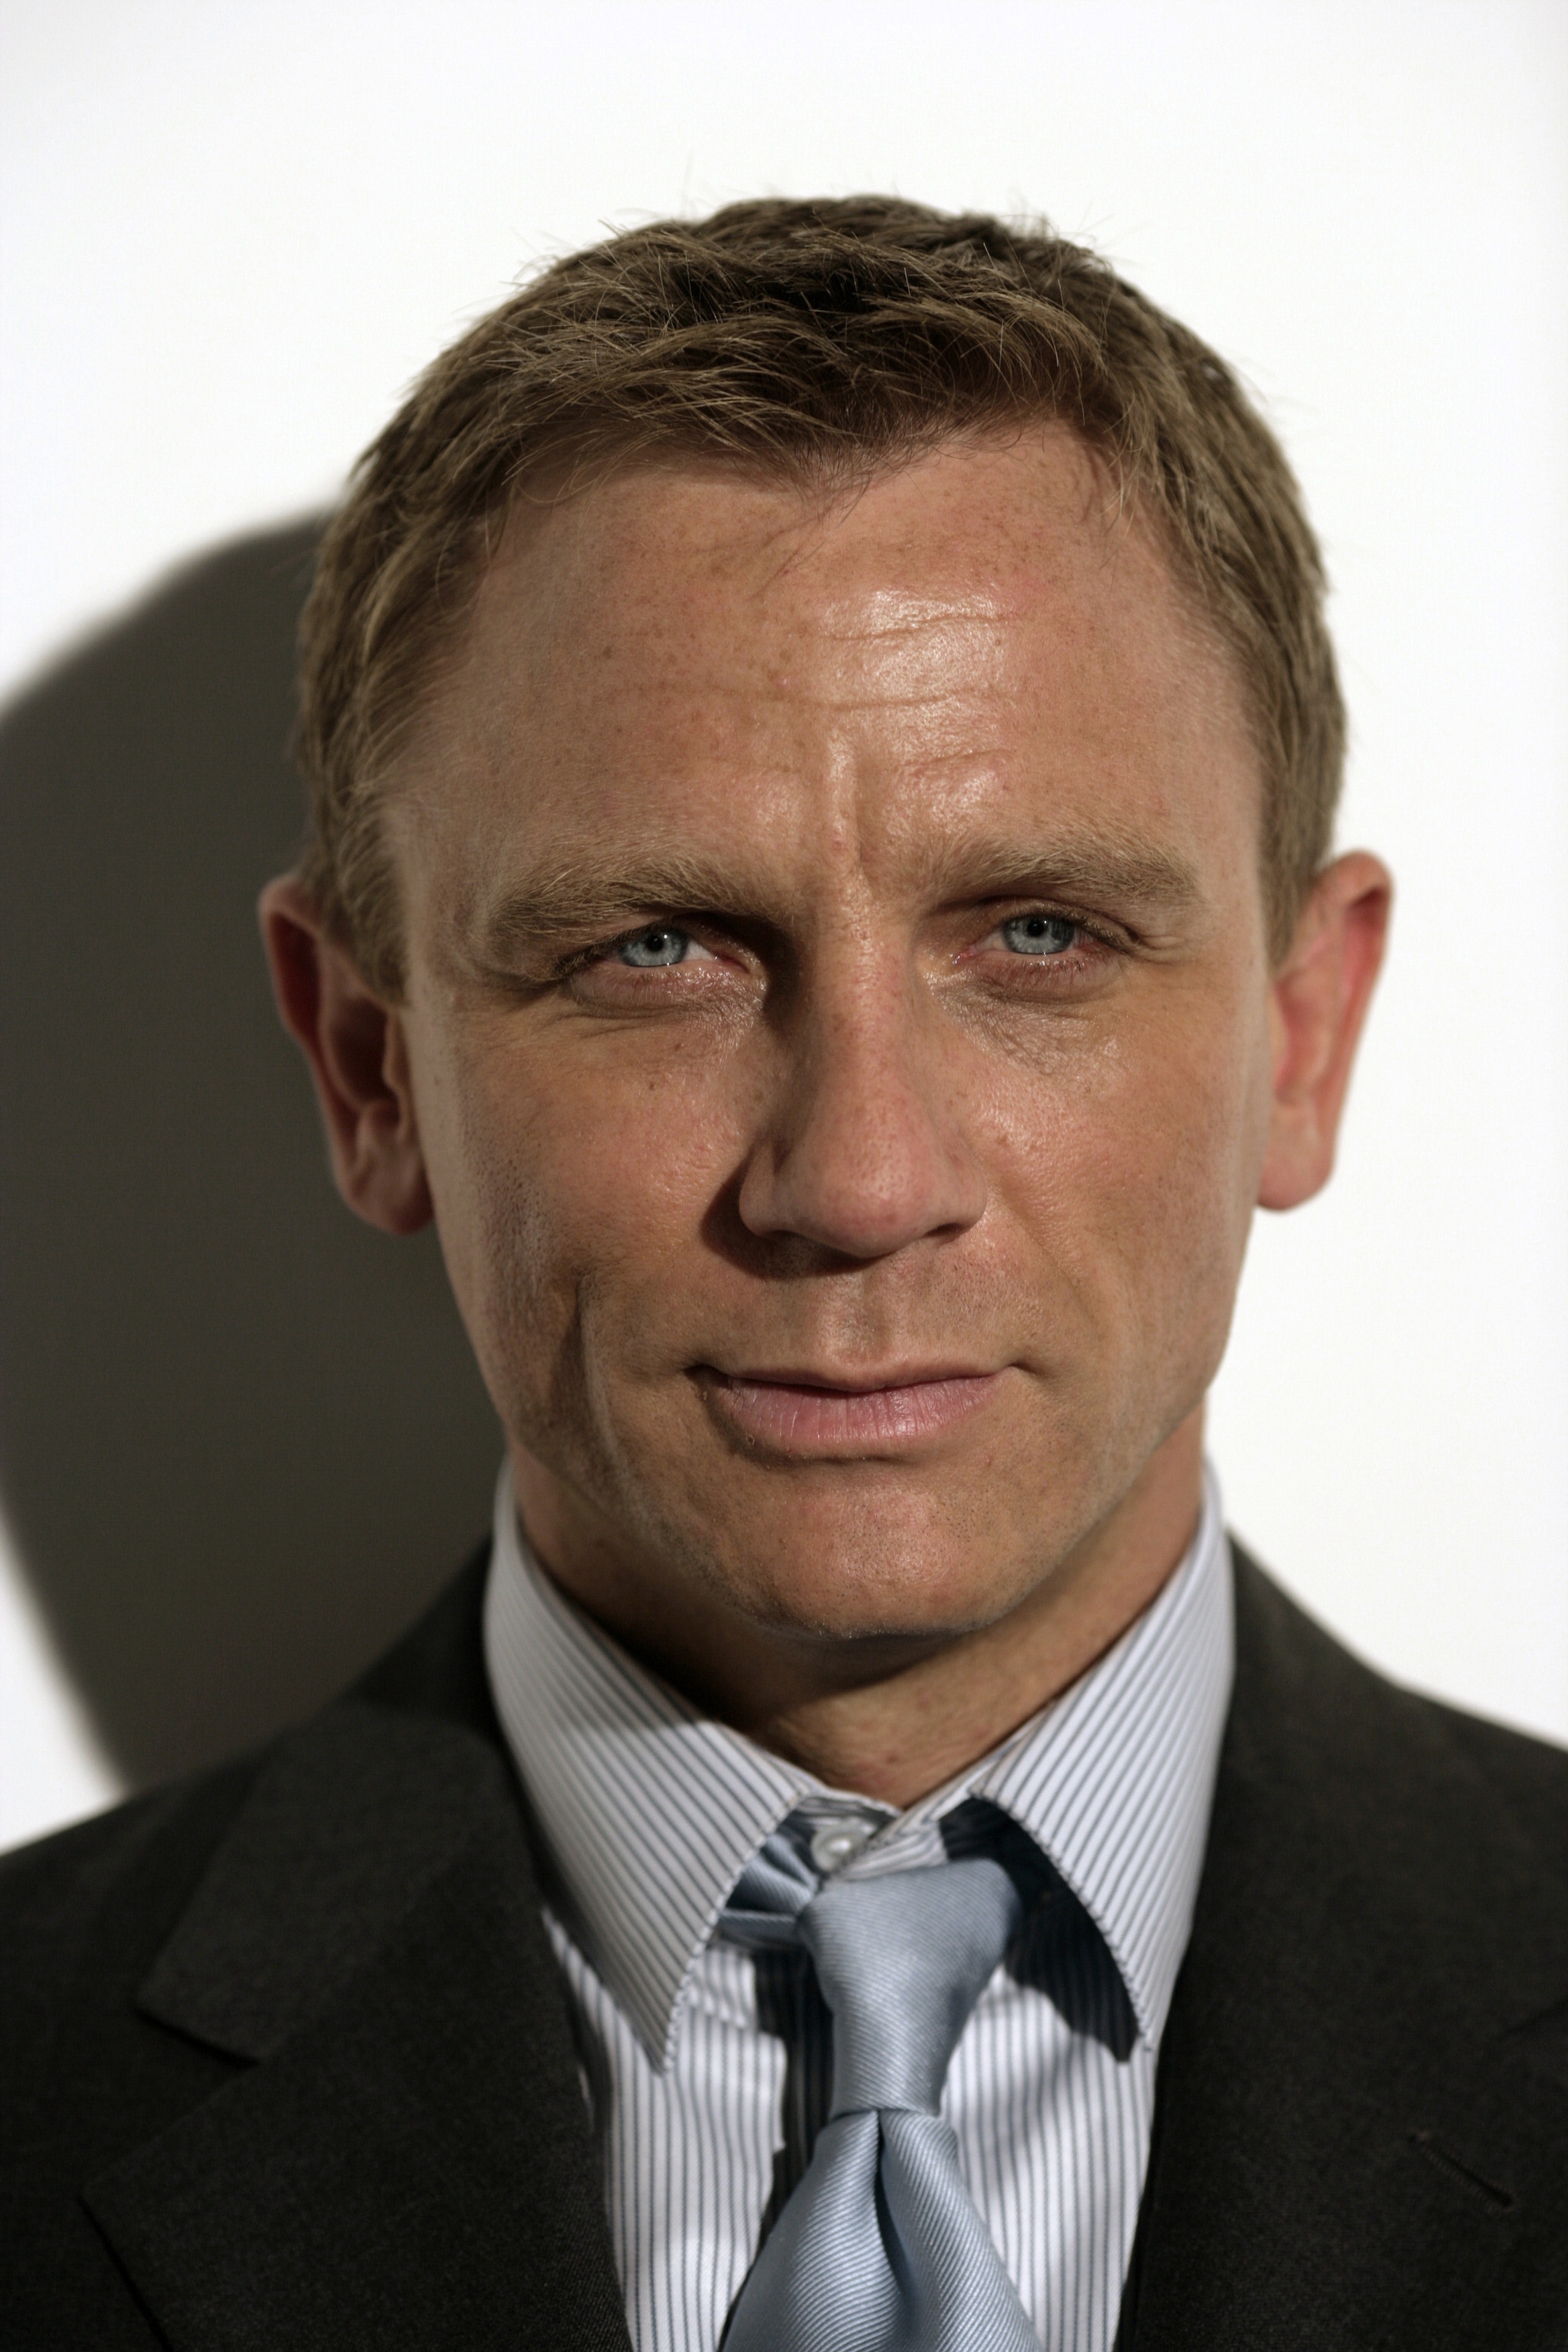 Daniel Craig photo 276 of 774 pics, wallpaper - photo #320845 - ThePlace2